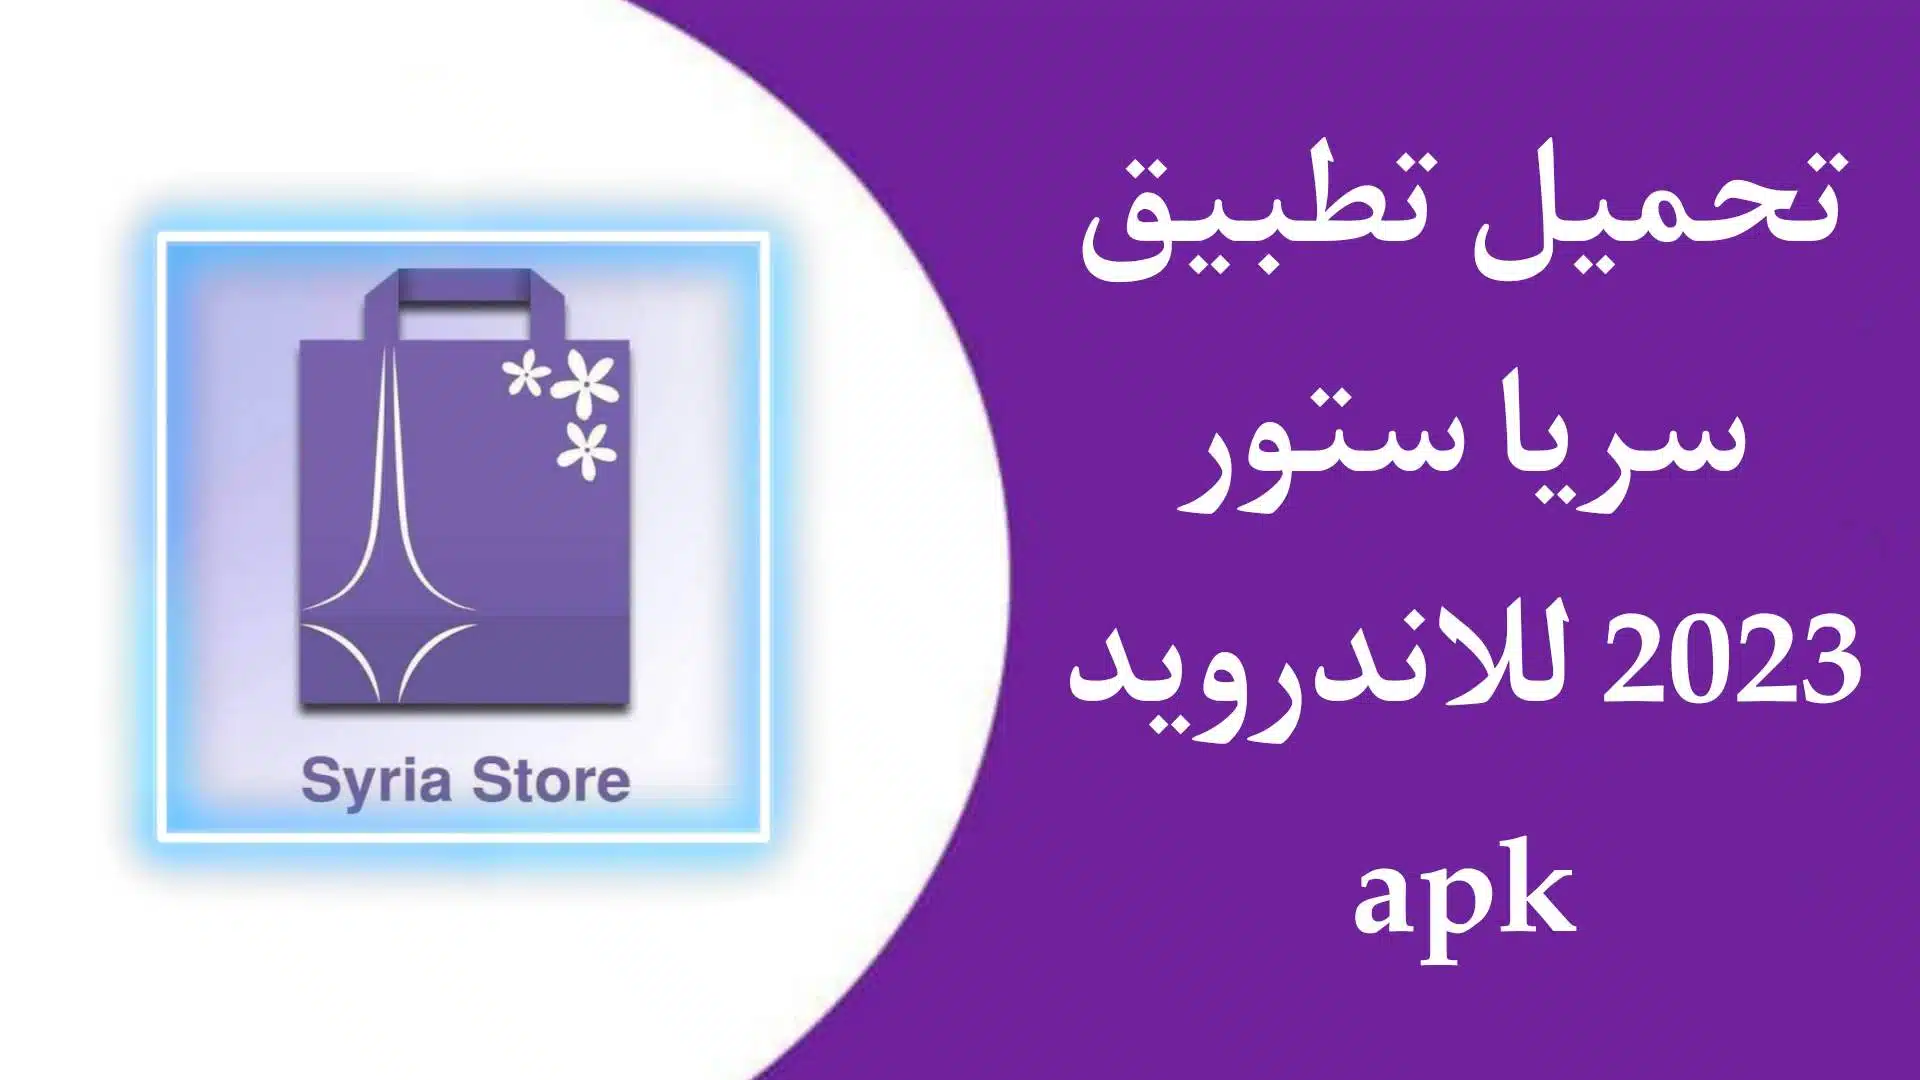 تنزيل تطبيق سيريا ستور 2023 syria store apk للاندرويد اخر اصدار مجانا